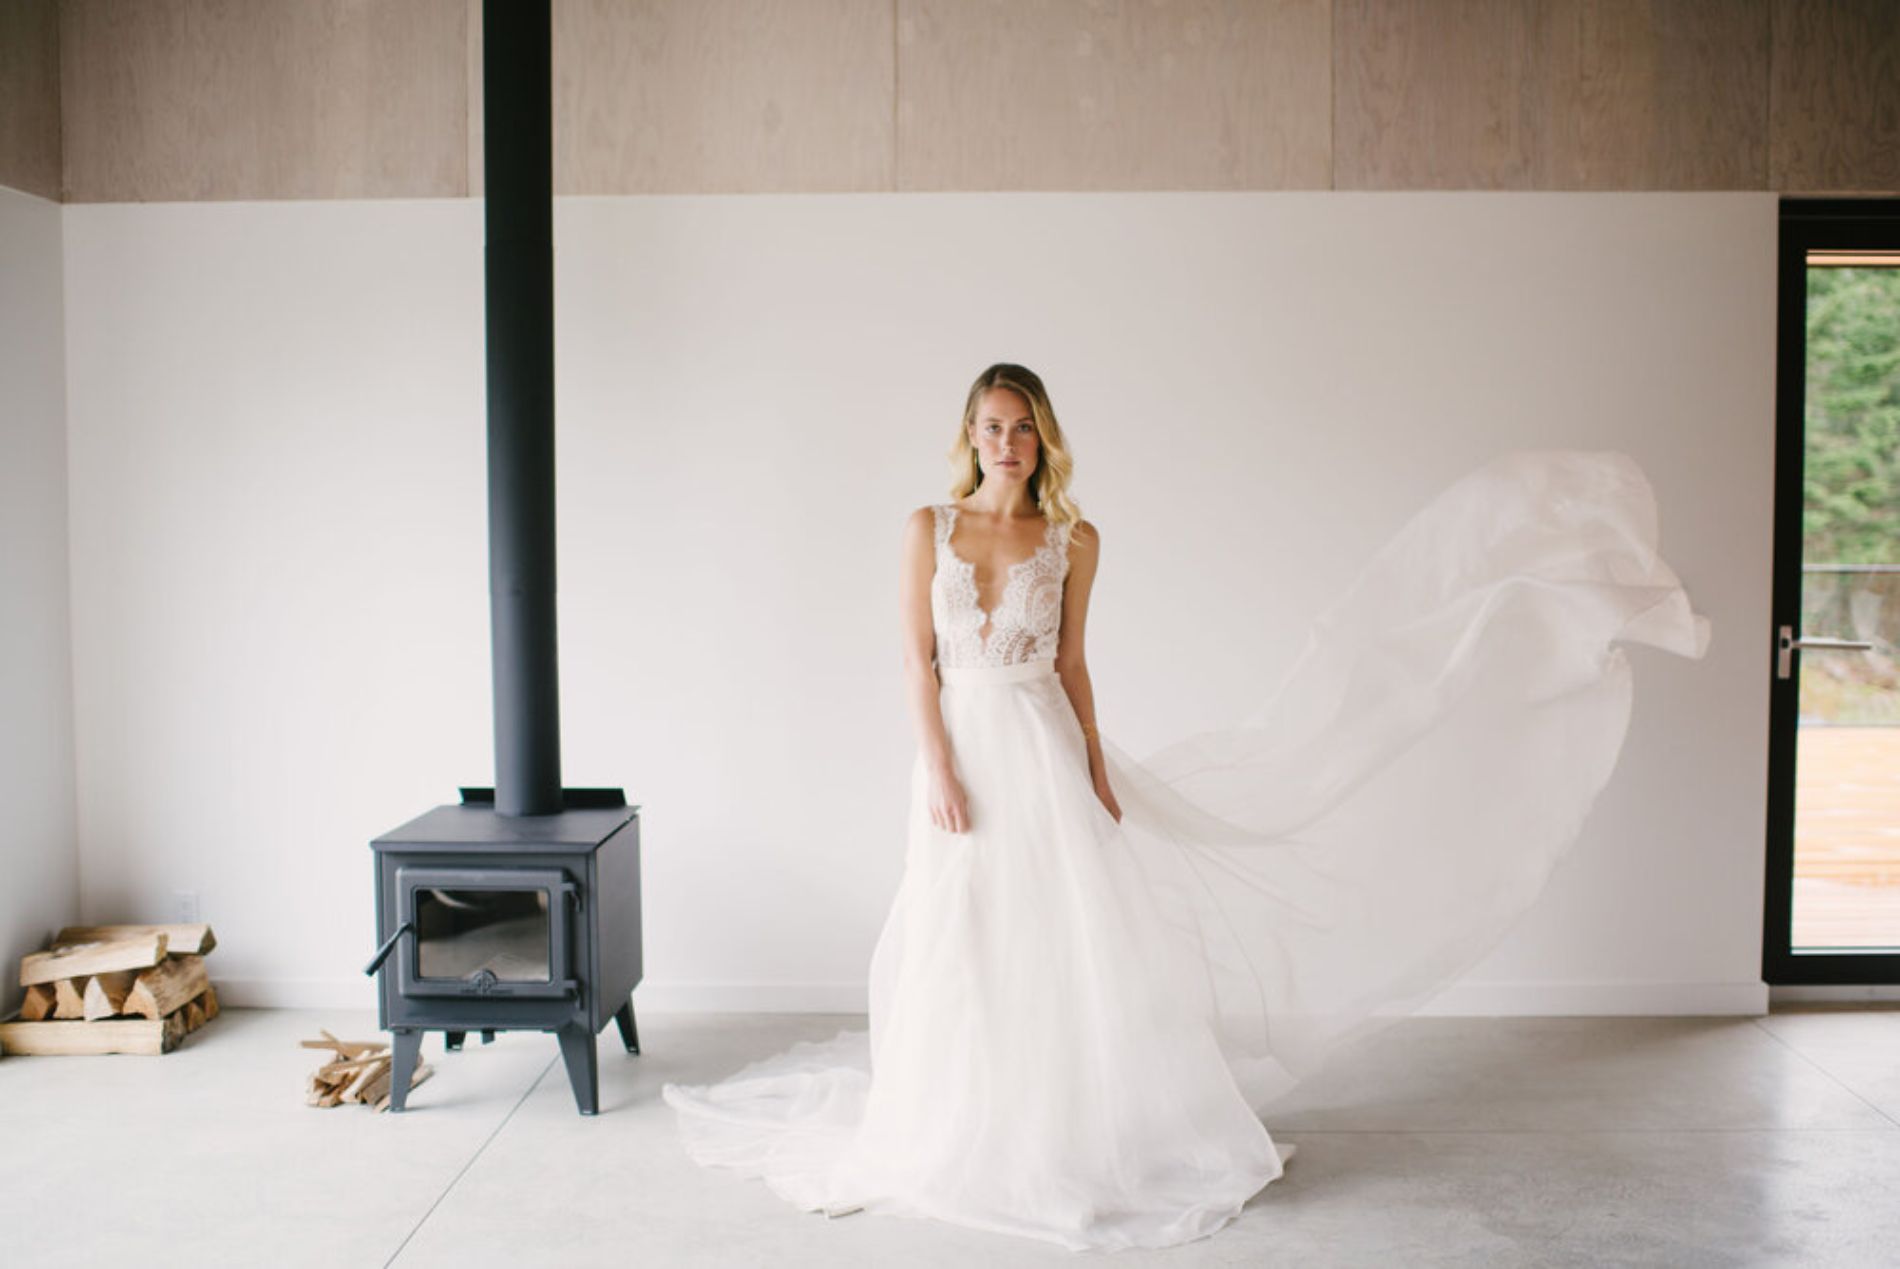 Woman in wedding dress posing by fireplace